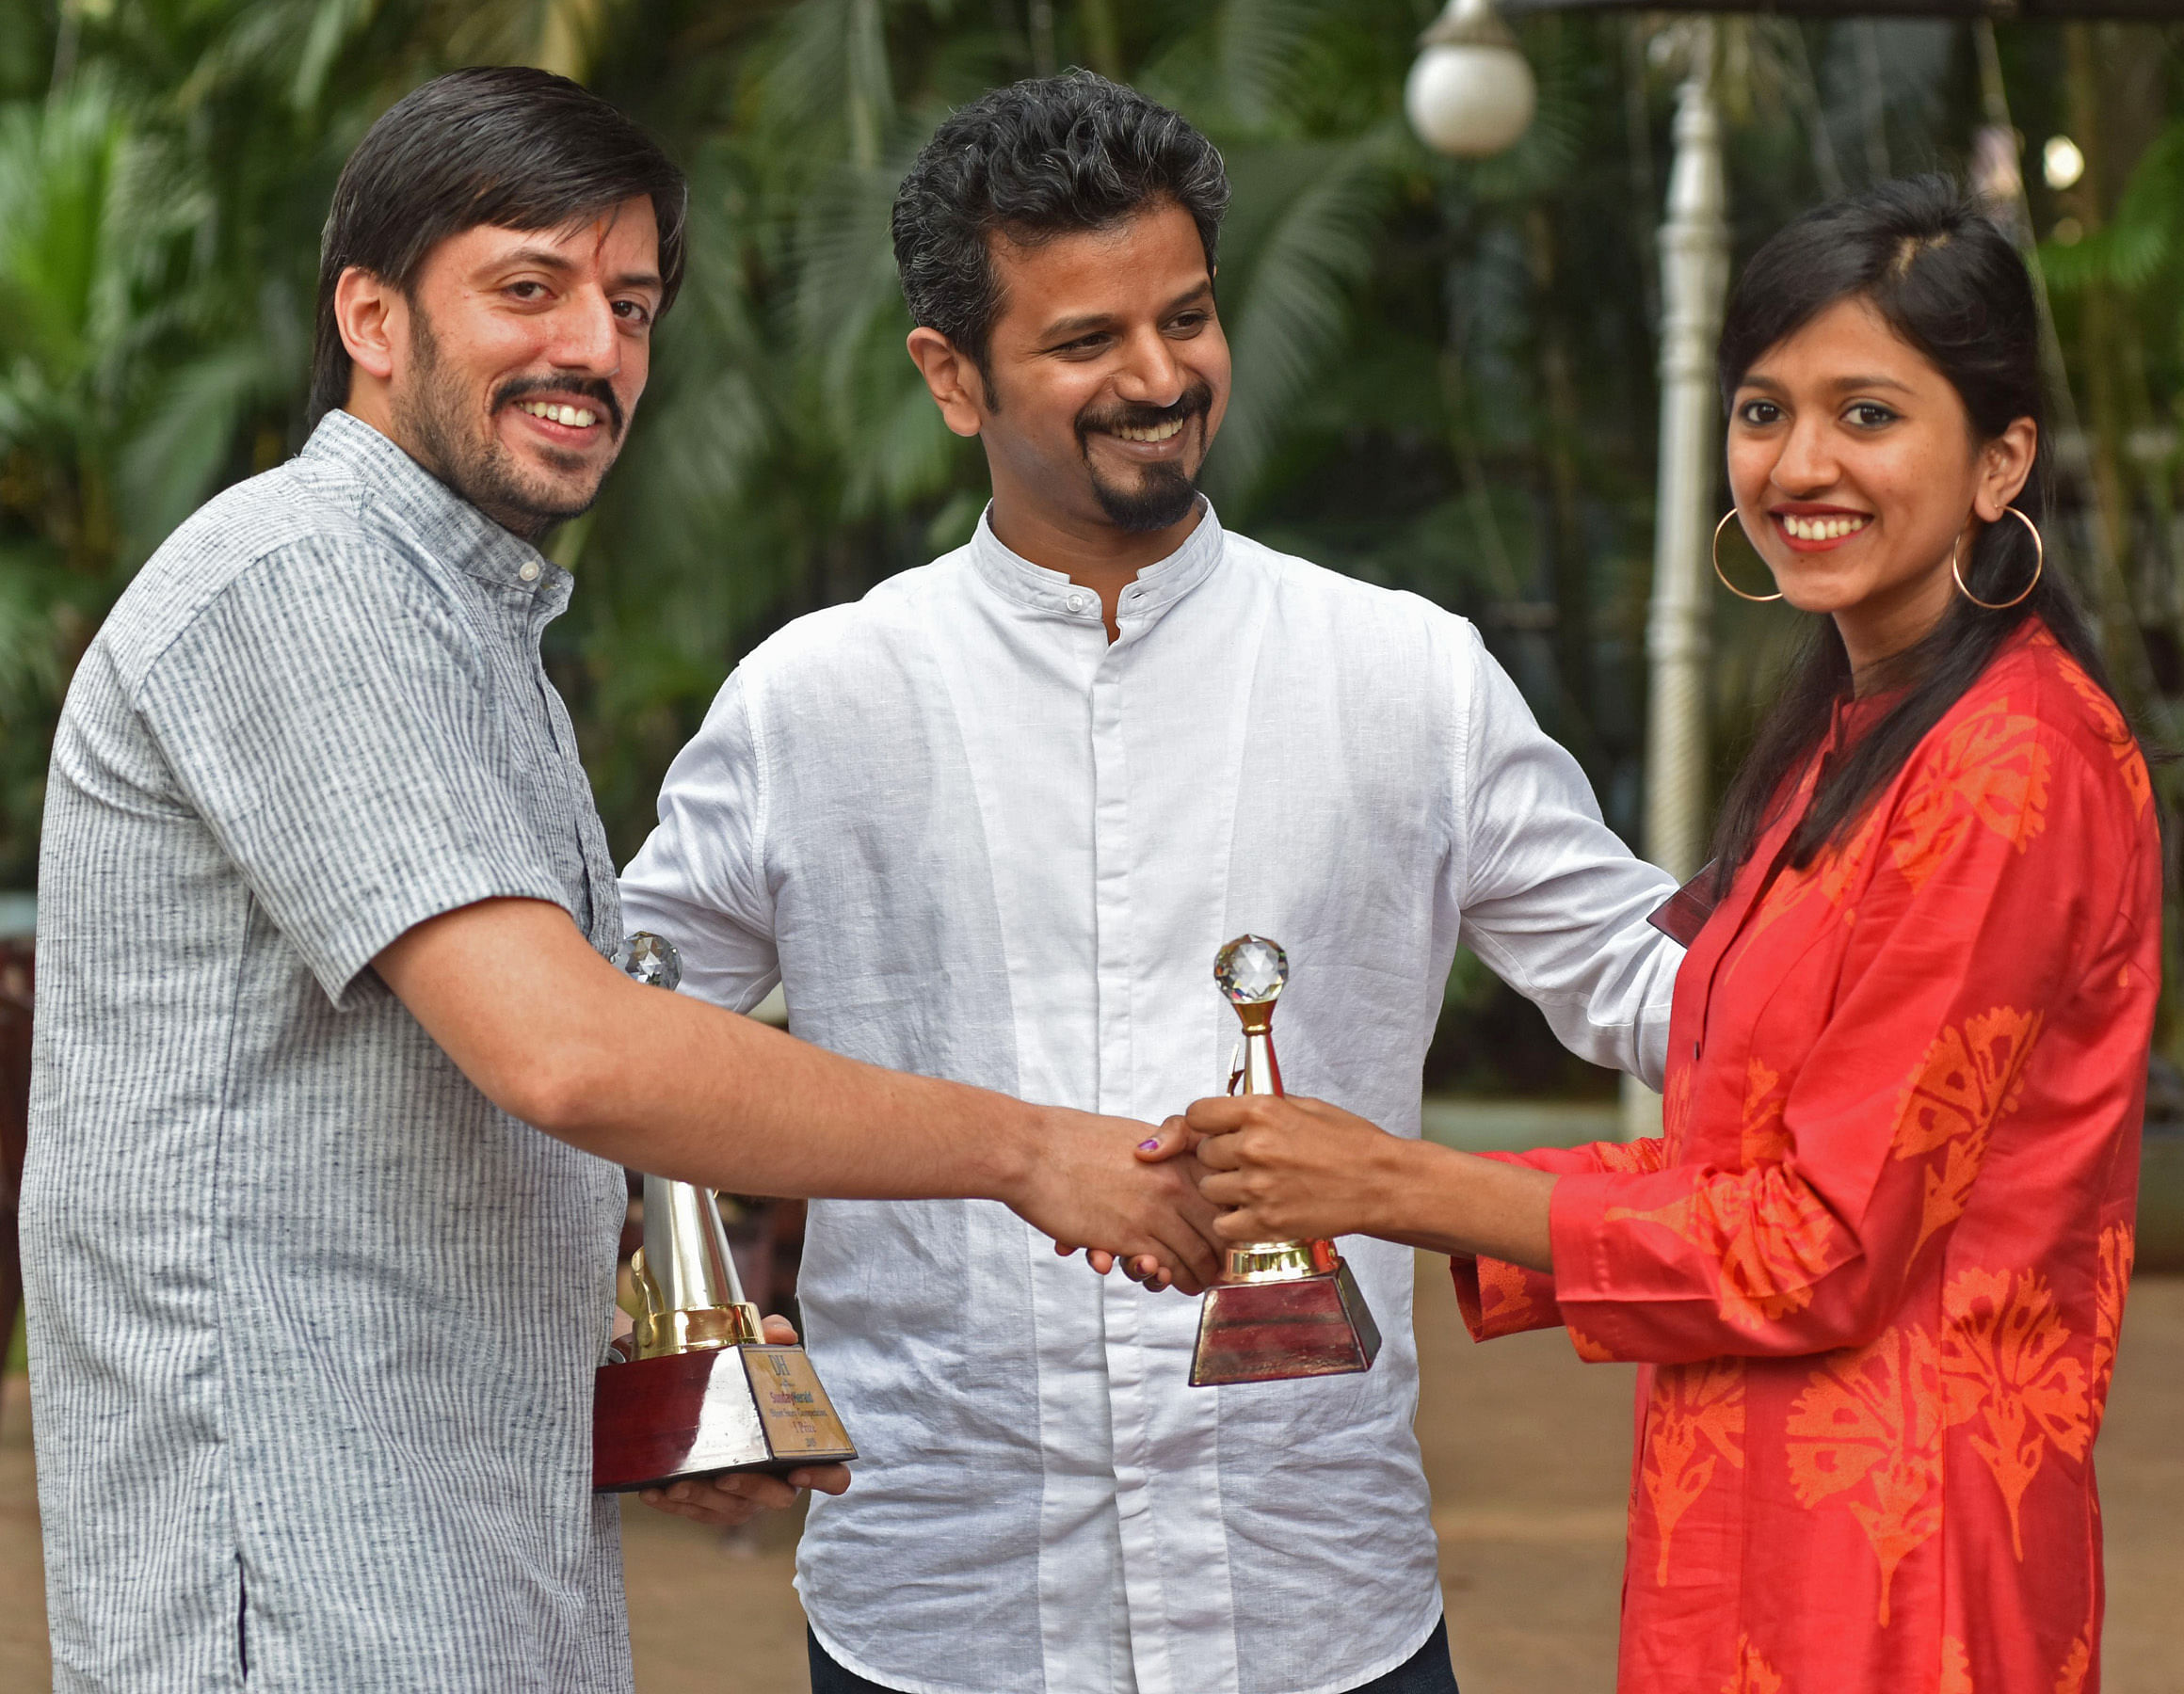 Srinivasa Gopala P K, Nikhil D Hegde and Sanjana M Vijayshankar, the winners of the competition.